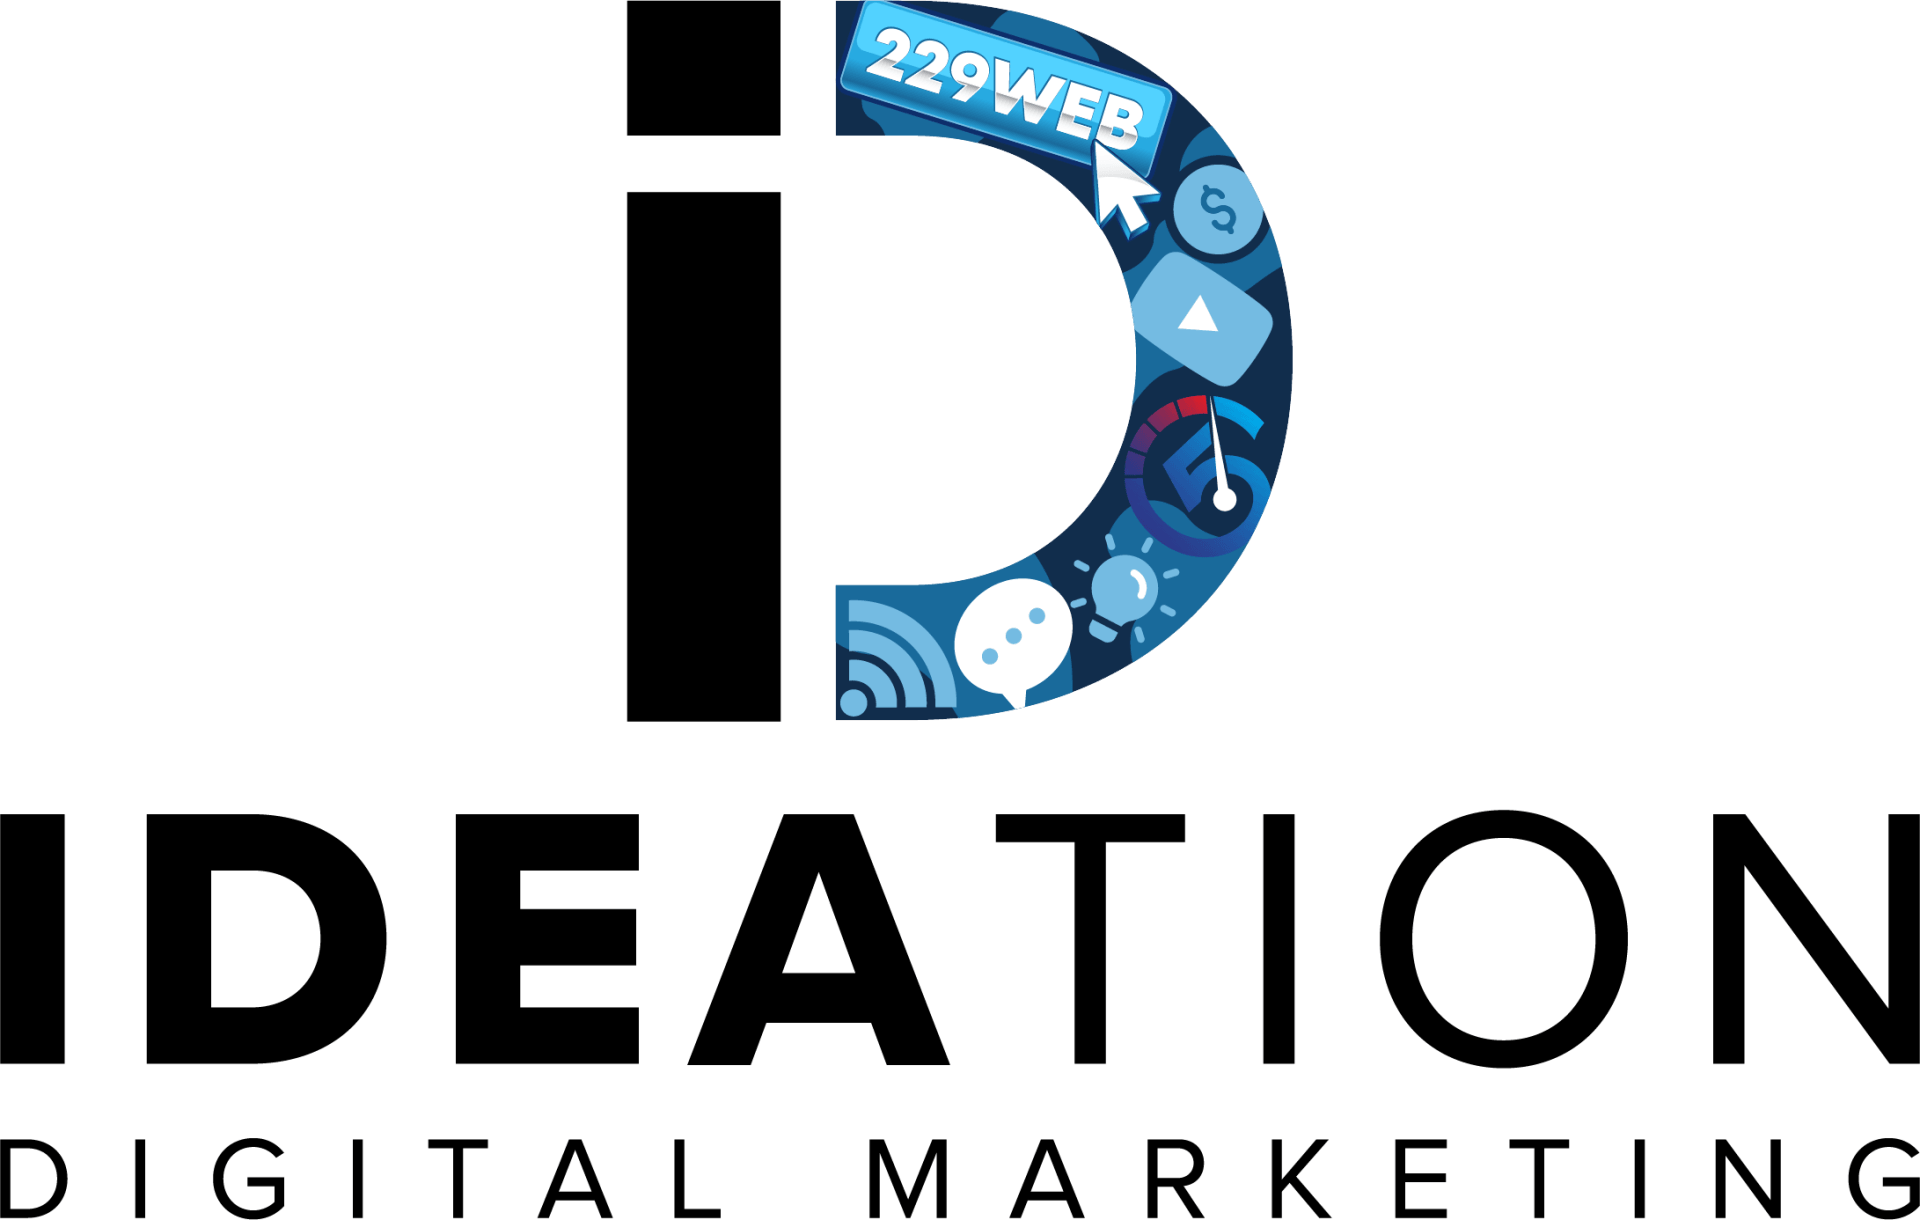 Ideation digital marketing logo for the header